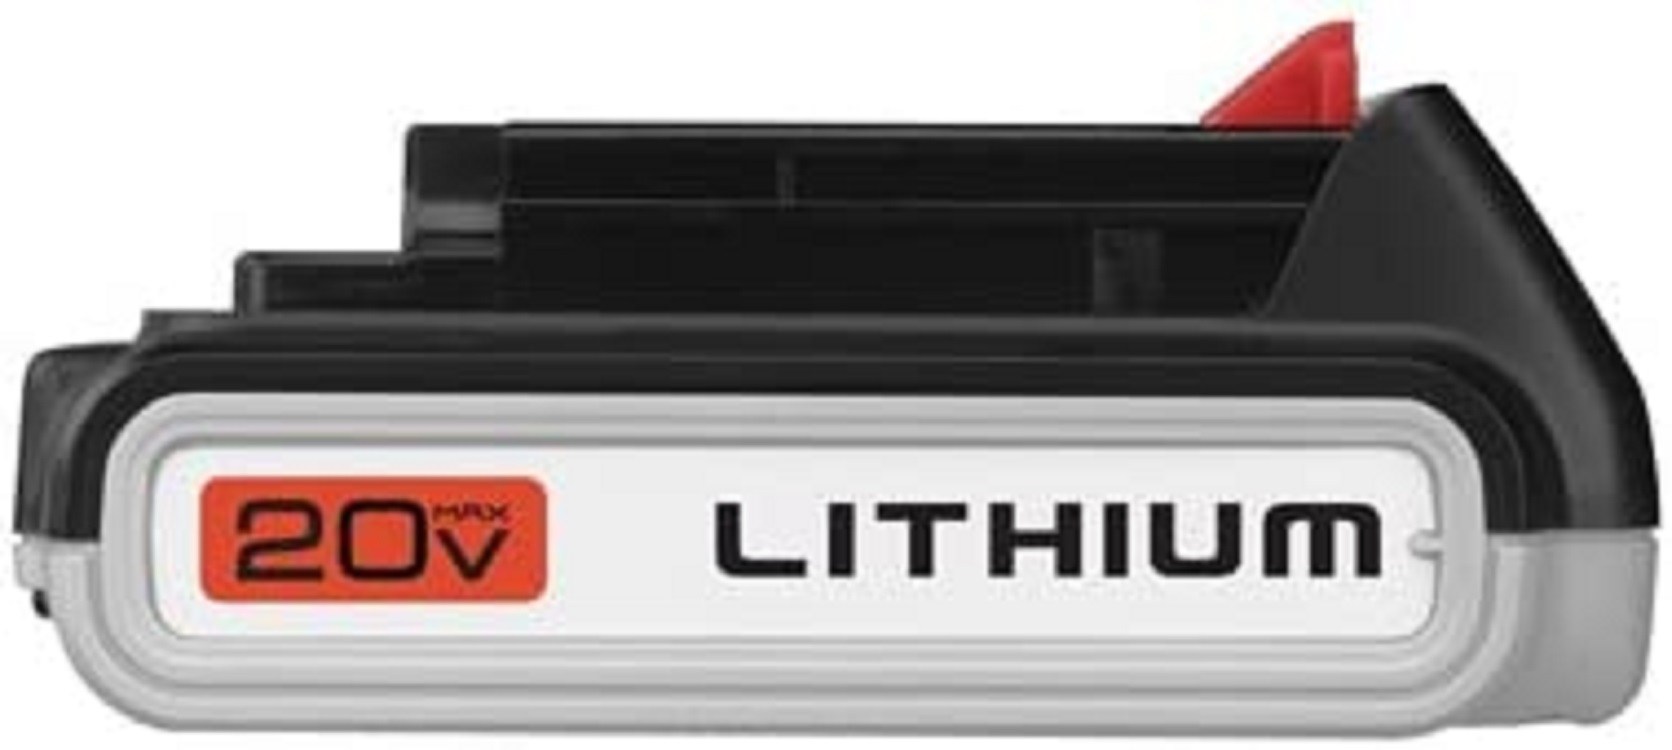 https://cdn.bestreviews.com/images/v4desktop/product-matrix/best-black-and-decker-replacement-batteries-20v-powerconnect-1-5ah-lithium-ion.jpg